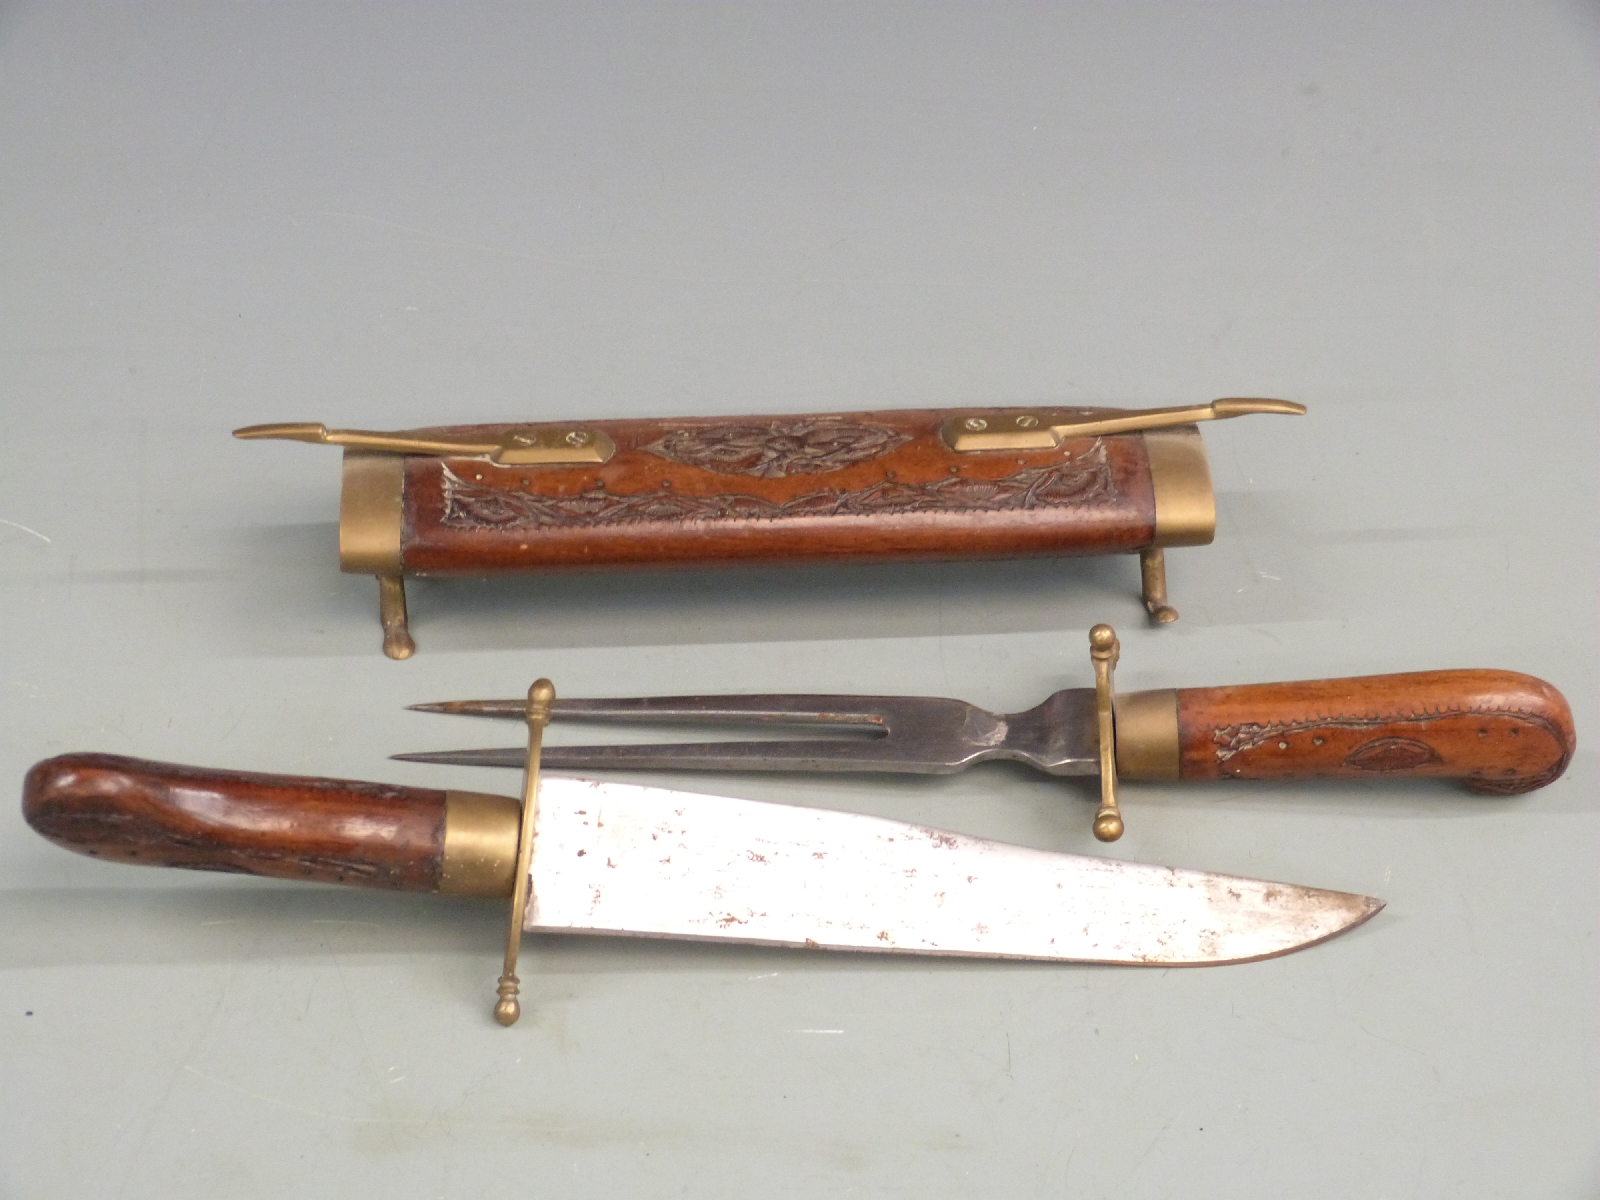 Rifle scope, military bugle, knives, Indian carving set etc - Image 6 of 13